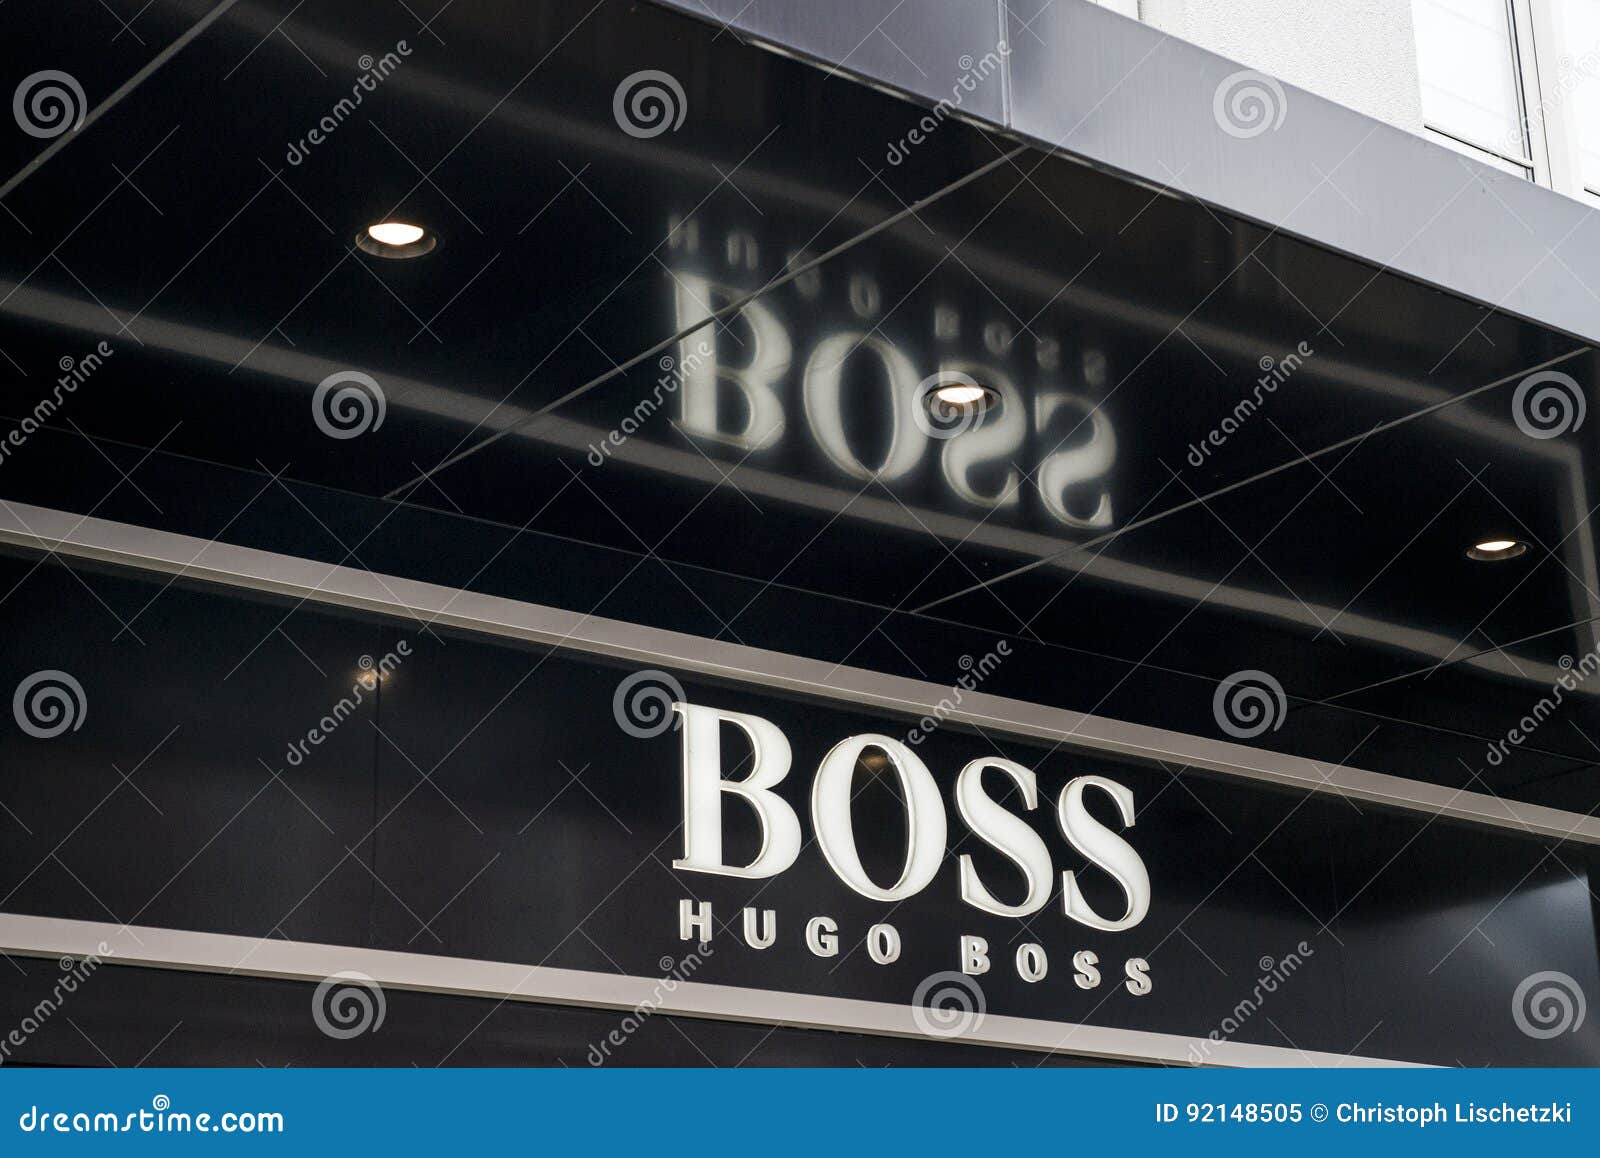 designer outlet hugo boss